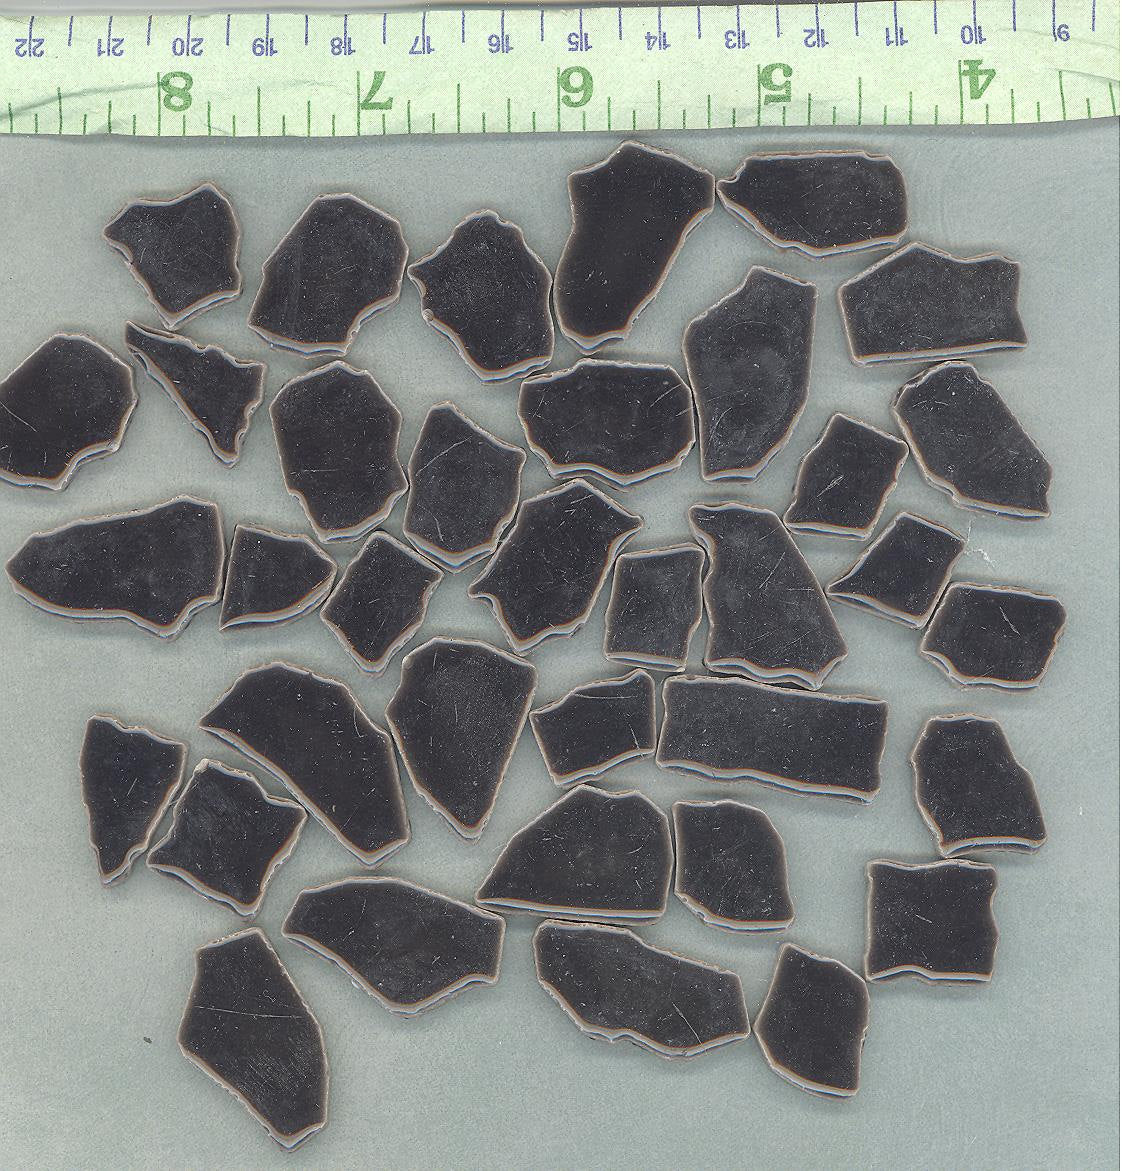 Shiny Black Mosaic Ceramic Tiles - Random Shapes - Half Pound - Assorted Sizes Jigsaw Pieces